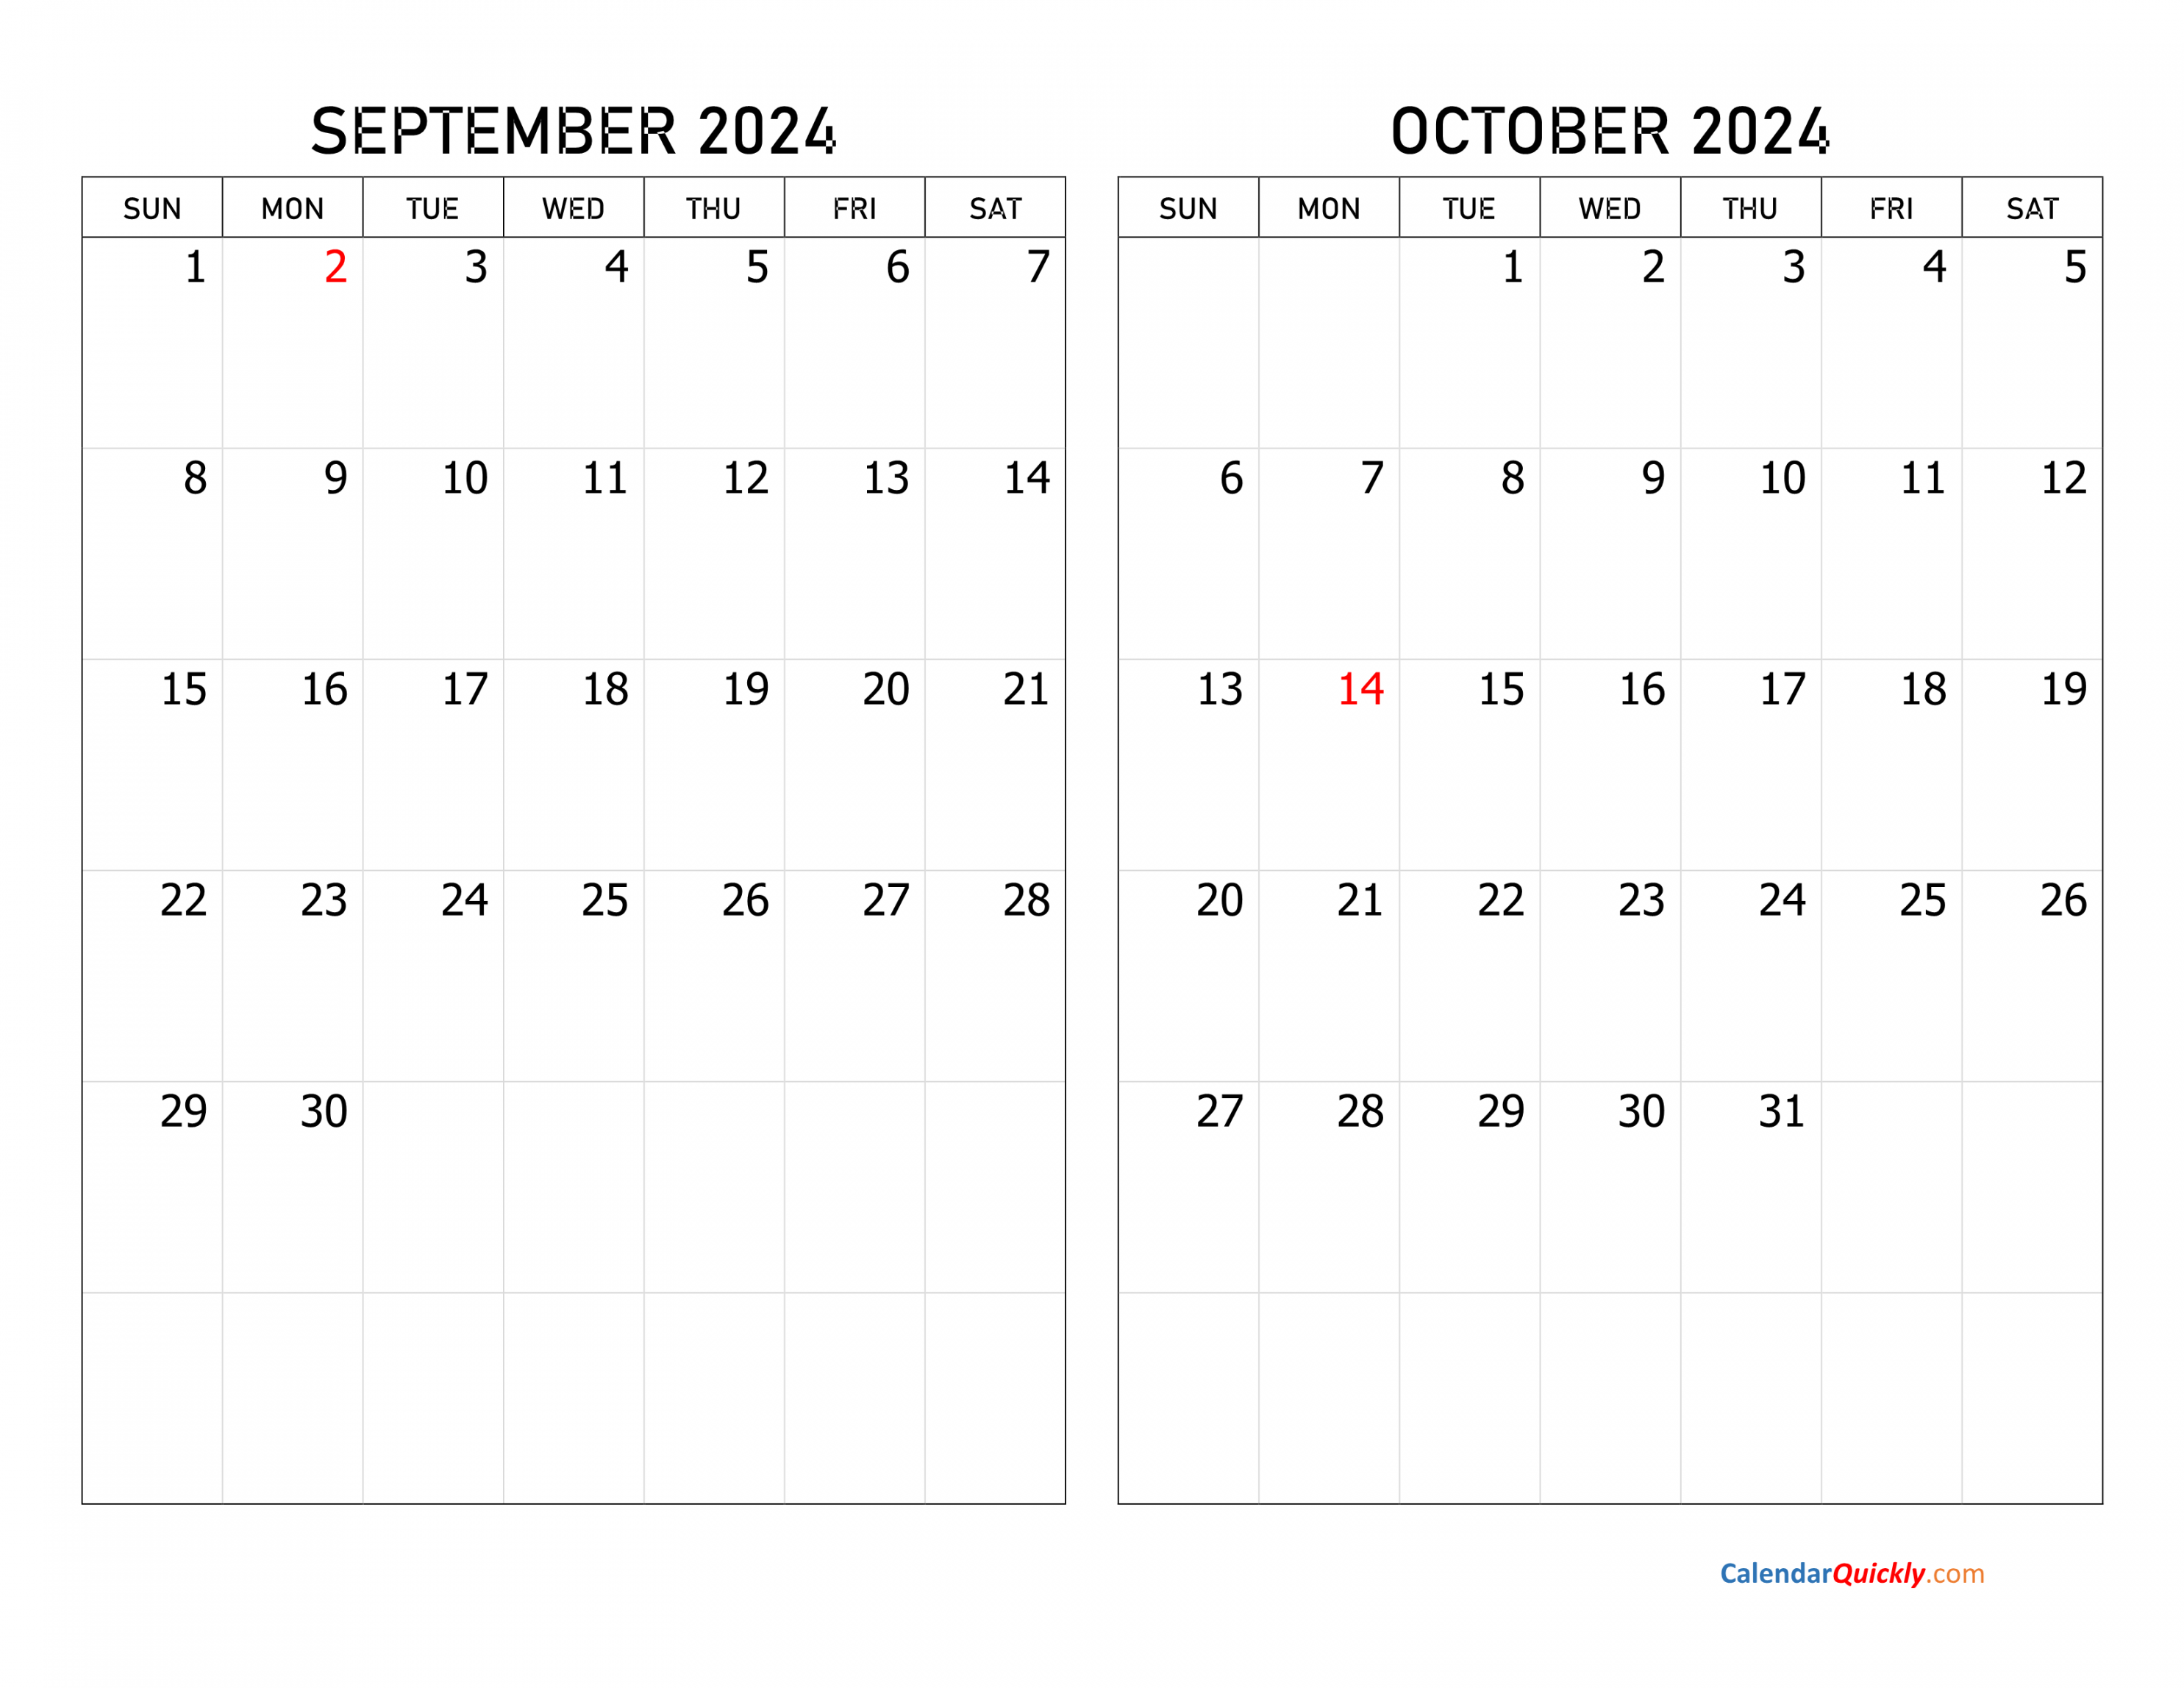 September and October Calendar Calendar Quickly